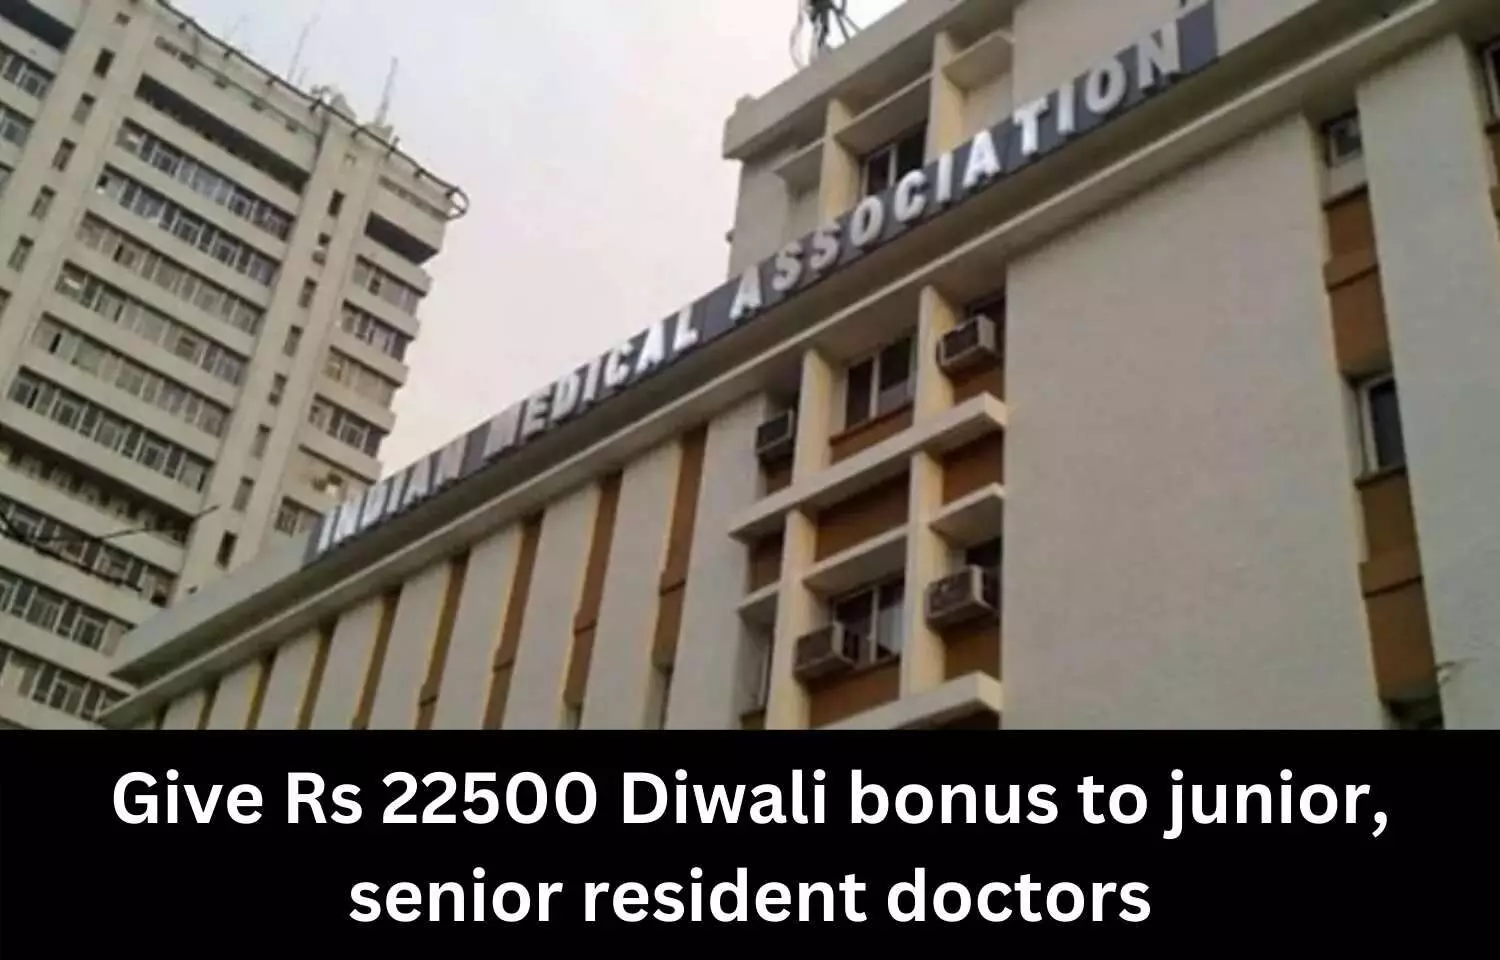 Give Rs 22500 Diwali bonus to junior, senior resident doctors: IMA Maha to CM